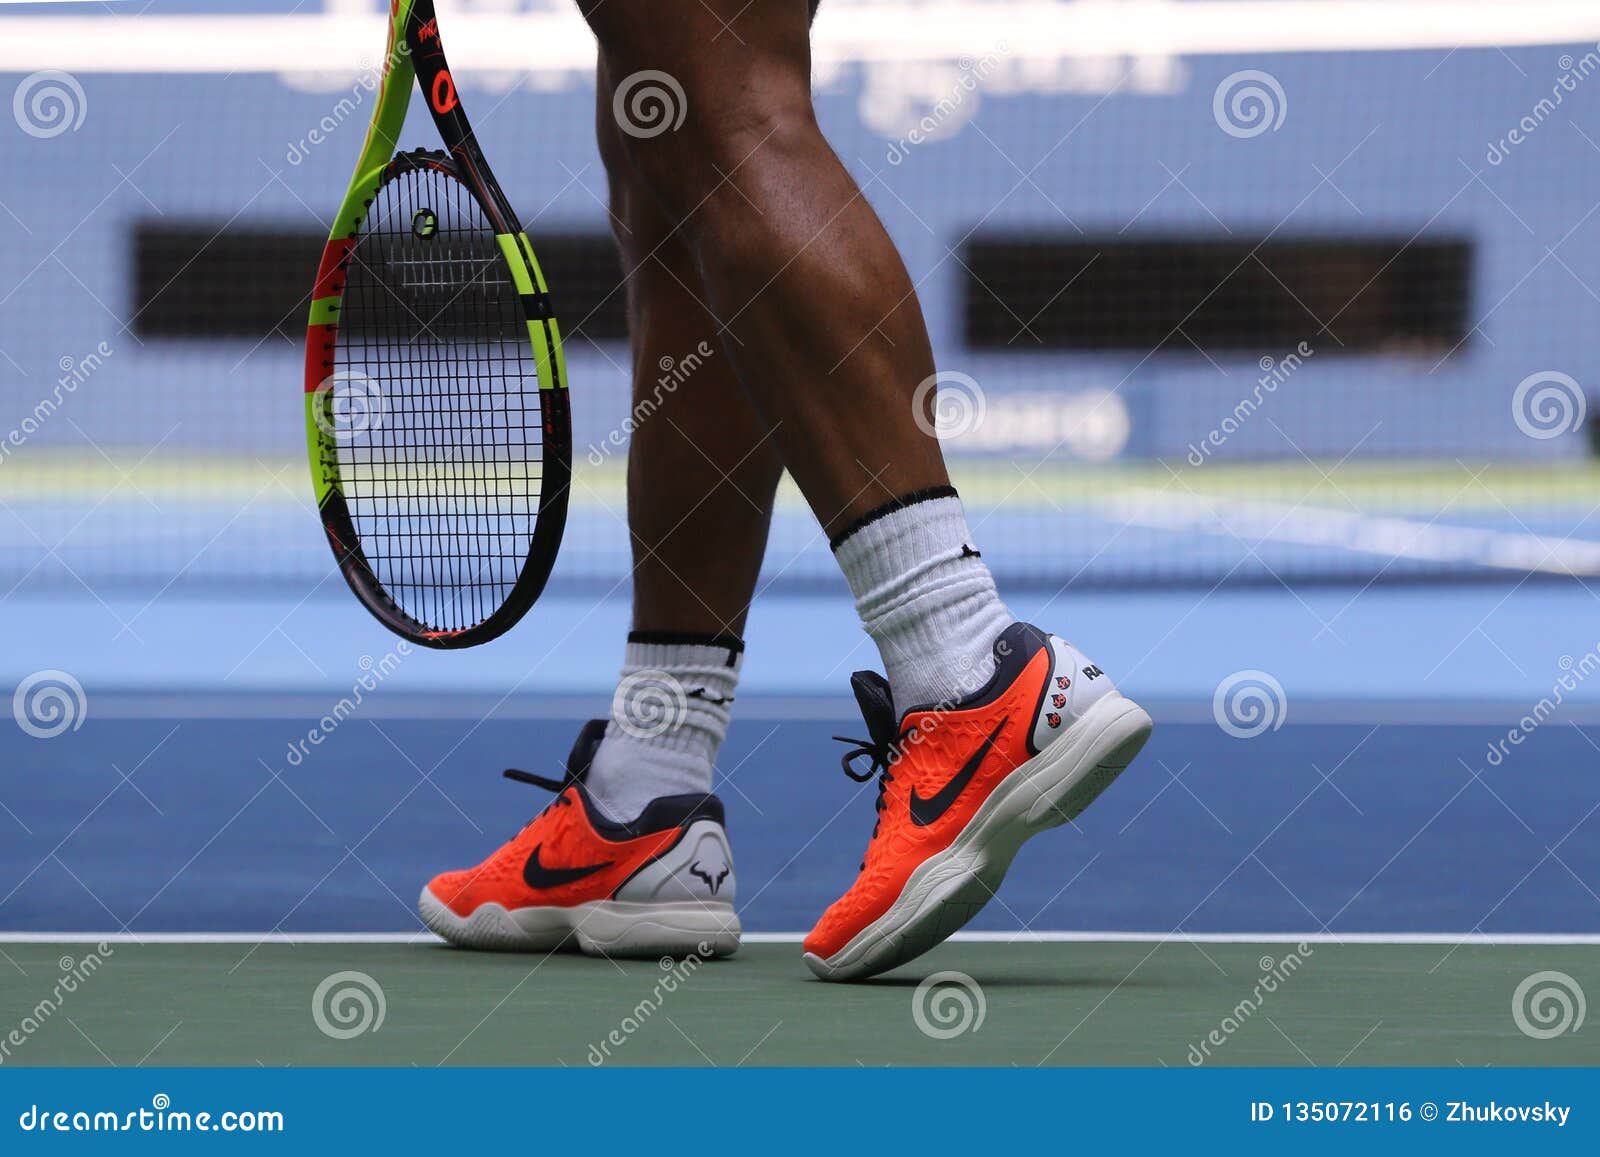 Grand Slam Champion Rafael Nadal of Wears Custom Nike Shoes during US Open 2018 Editorial Photo - Image of editorial, rafa: 135072116